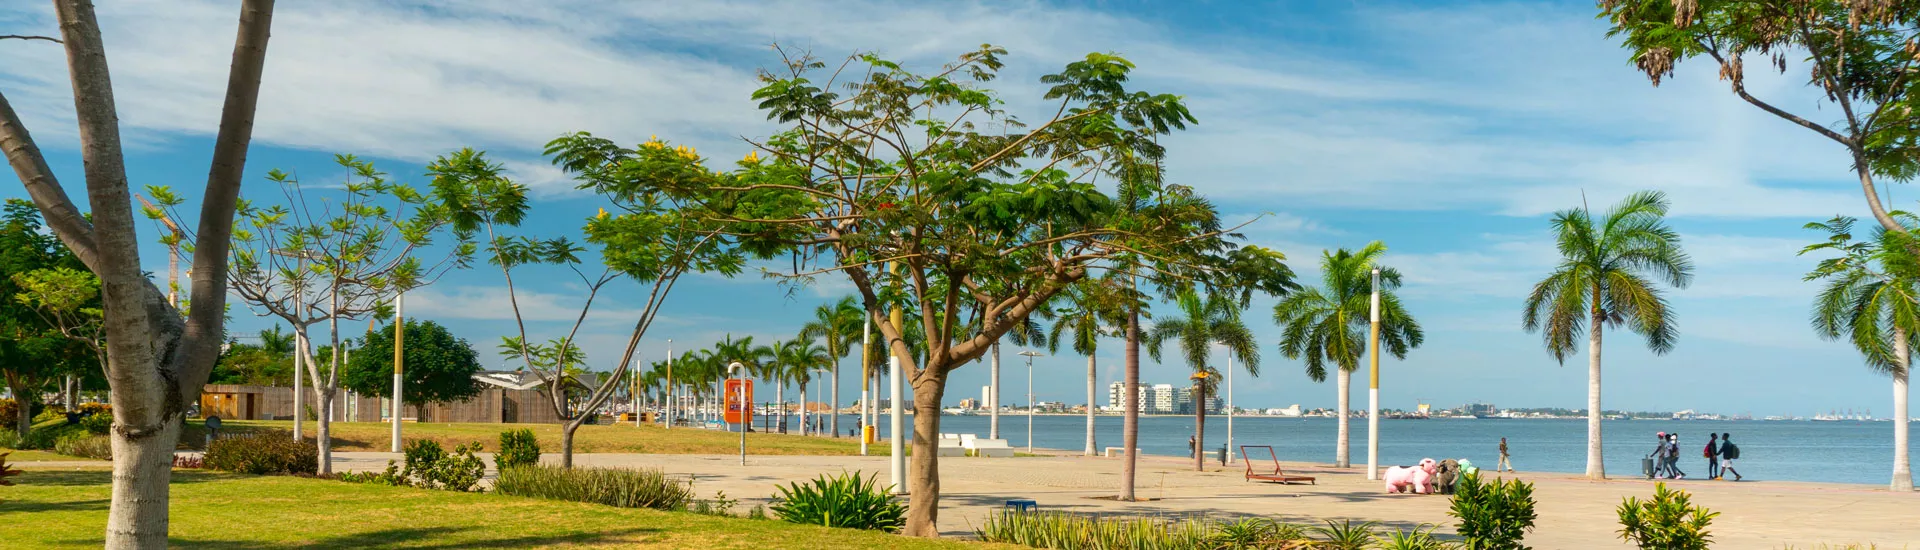 Blick auf die Strandpromenade der Hauptstadt Luanda